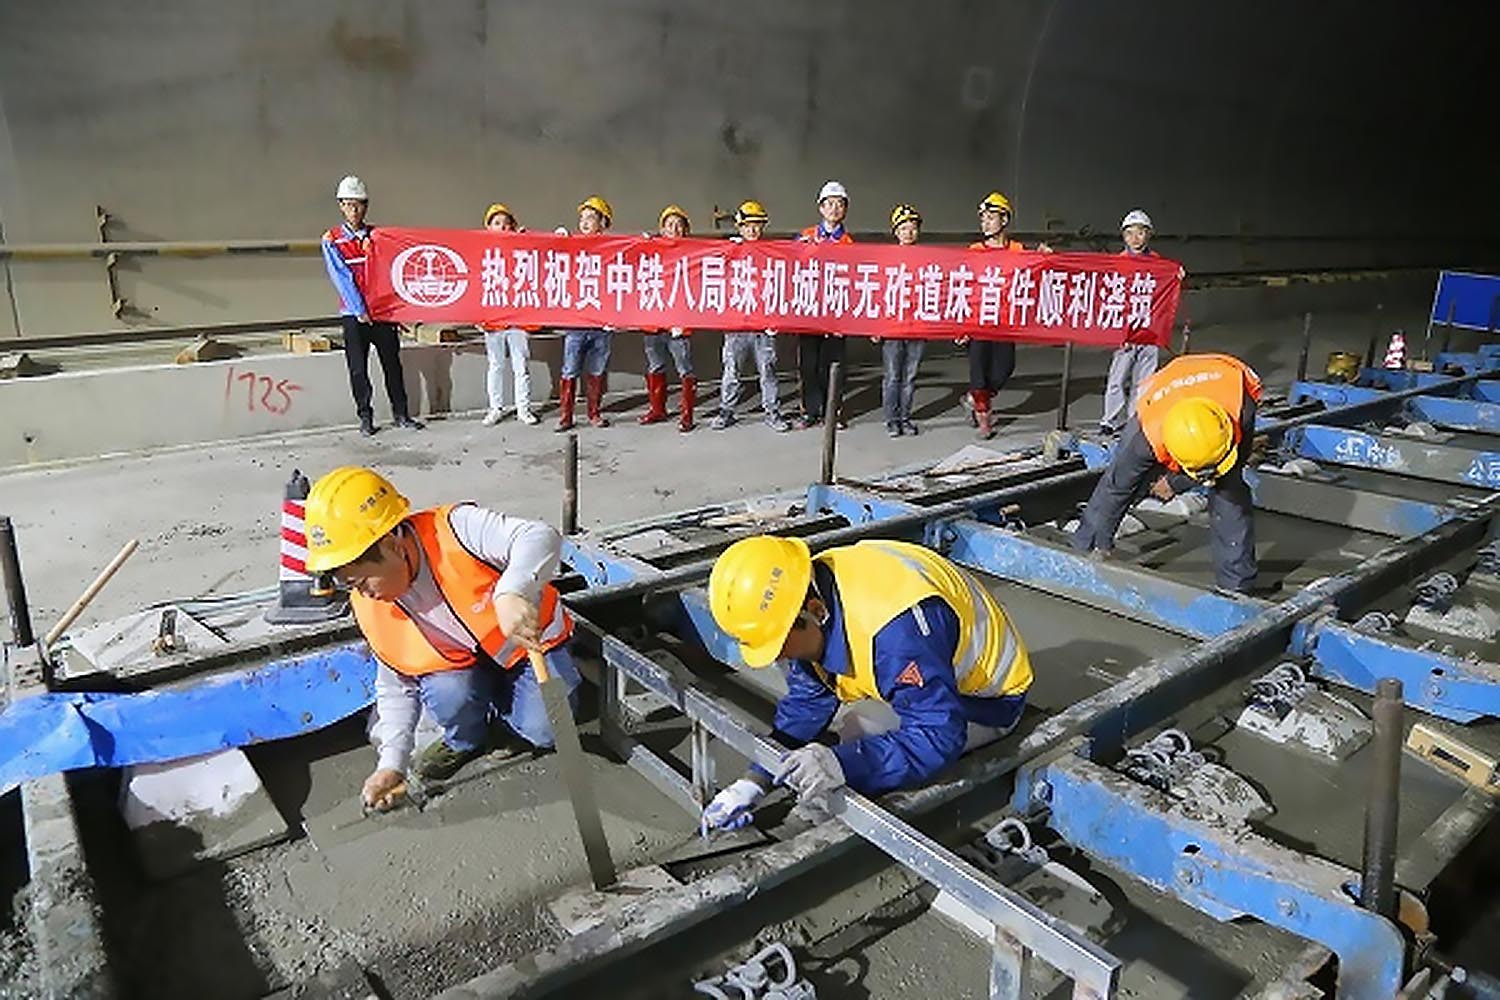 Hengqin-Zhuhai airport rail transit line to go into operation next year